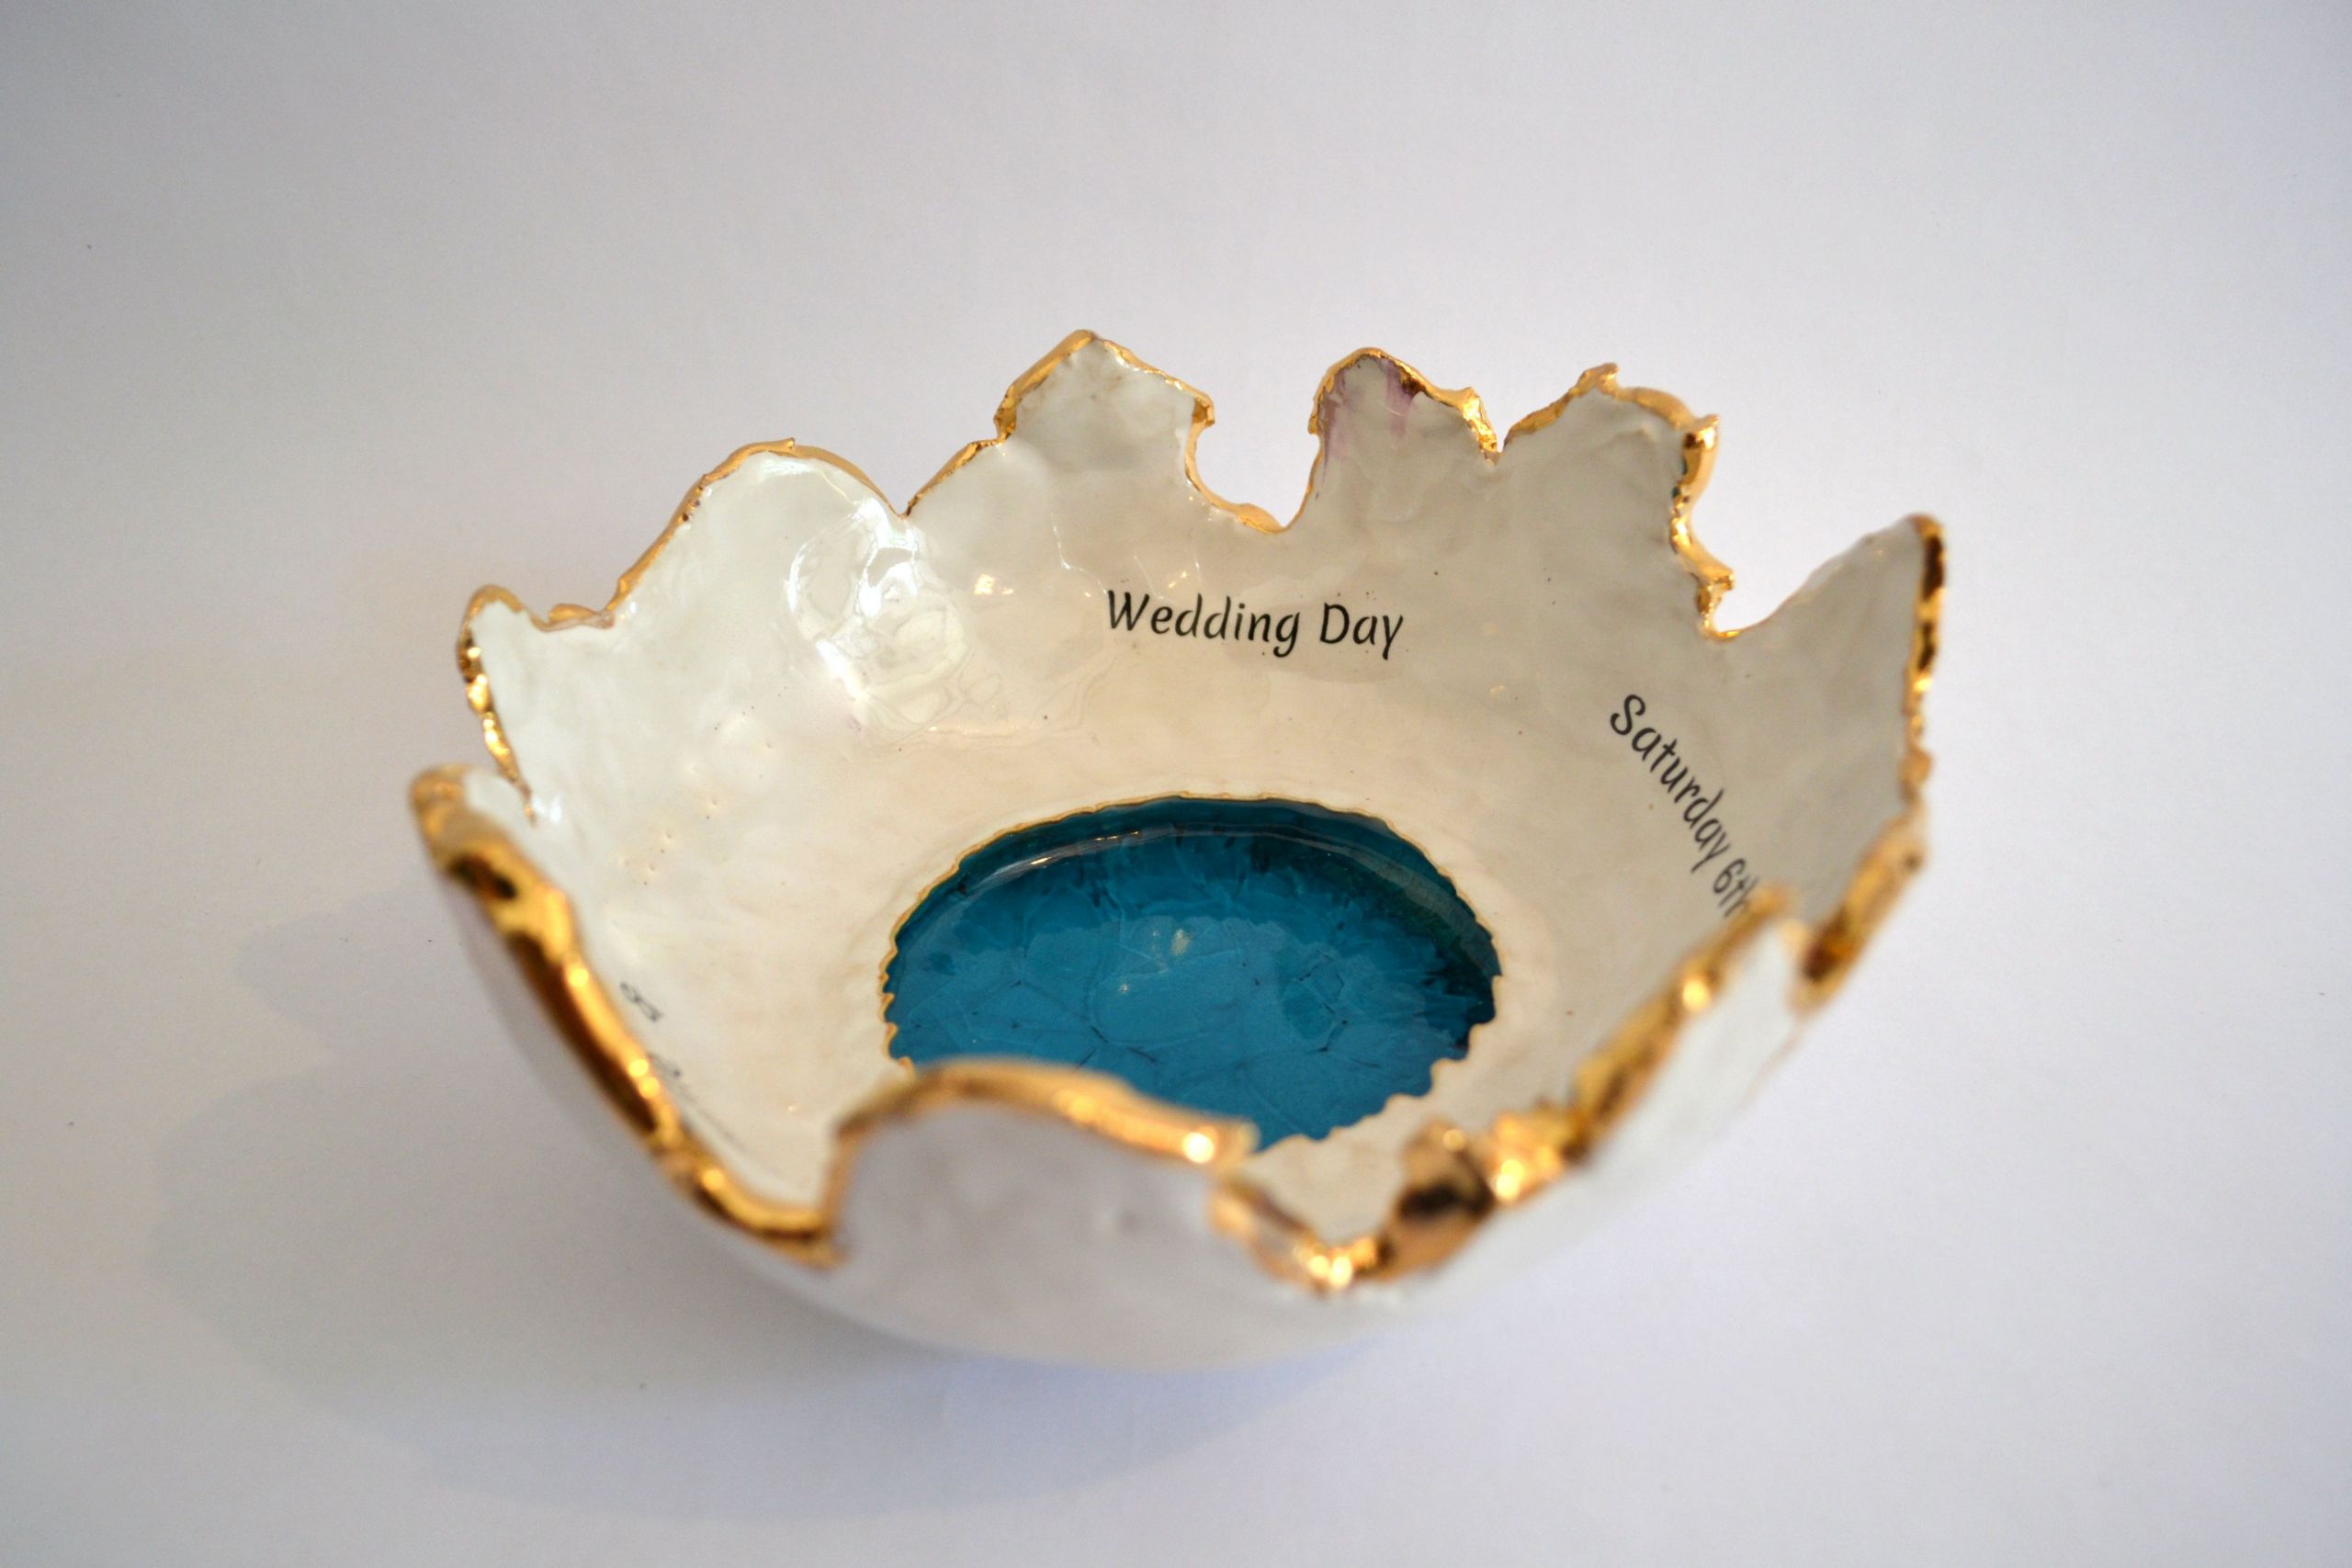 Pi Day Wedding Gifts
 Unique handmade Wedding Day Icelandic inspired ceramic